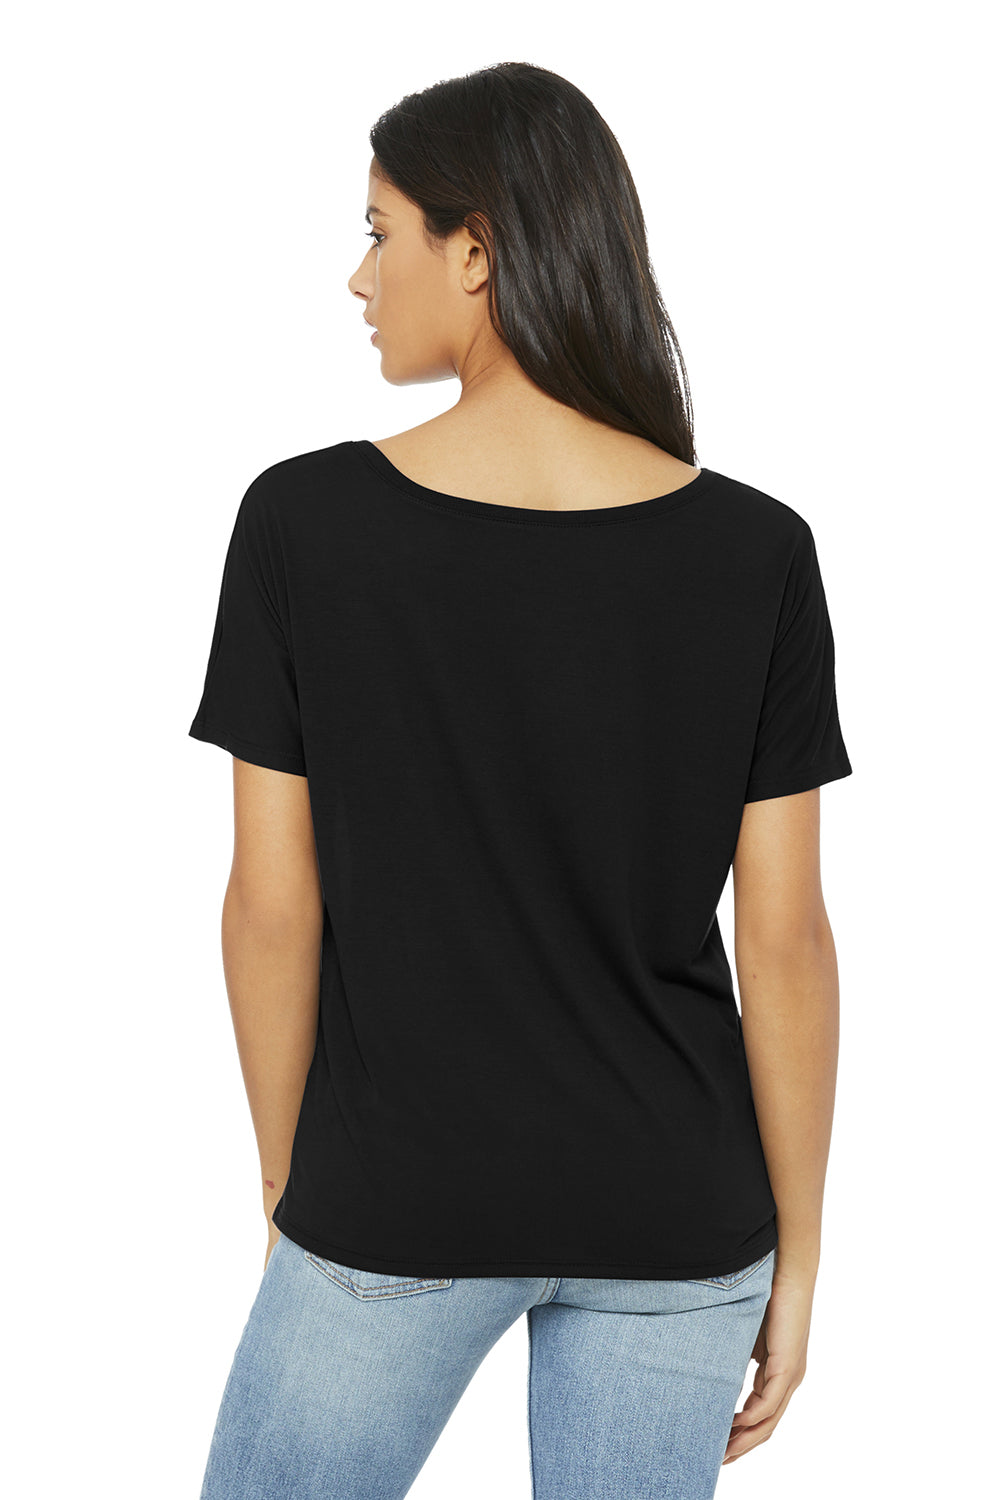 Bella + Canvas BC8816/8816 Womens Slouchy Short Sleeve Wide Neck T-Shirt Black Model Back